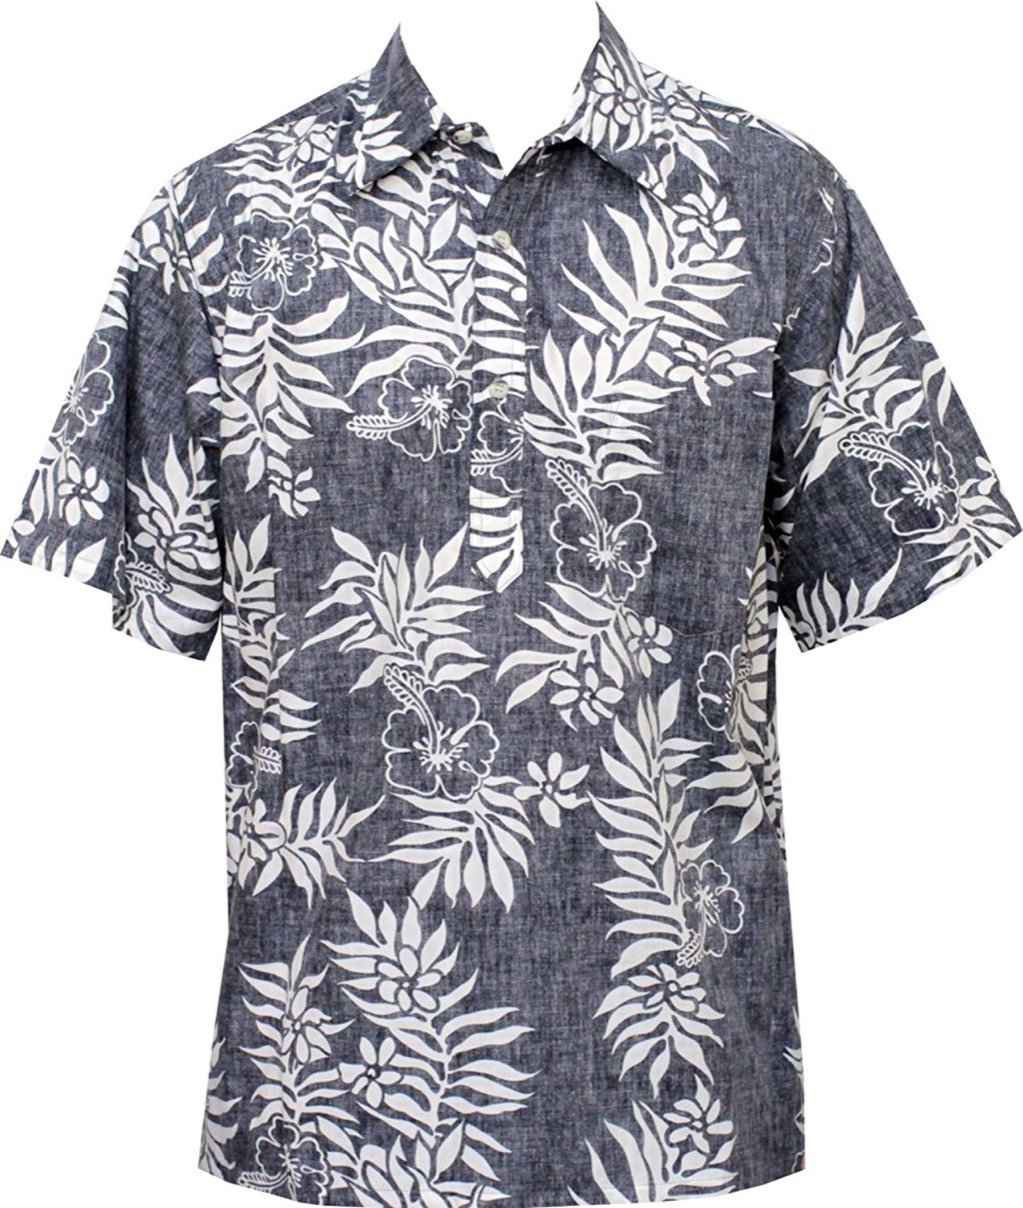 10 Hawaiian Shirts For Rocking a Cool Island Vibe All Summer Long ...